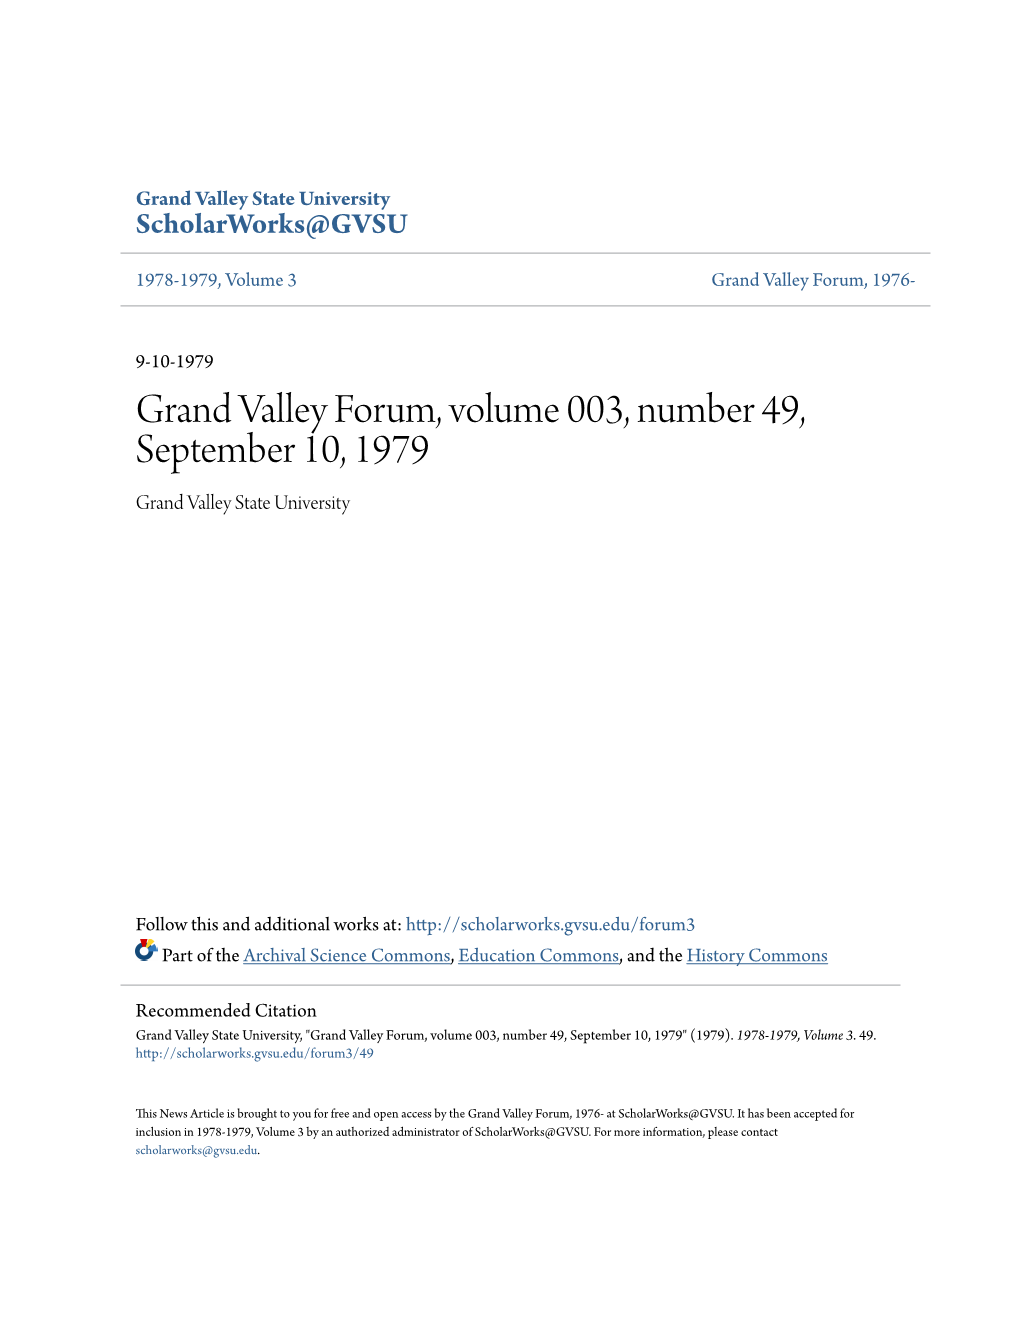 Grand Valley Forum, Volume 003, Number 49, September 10, 1979 Grand Valley State University